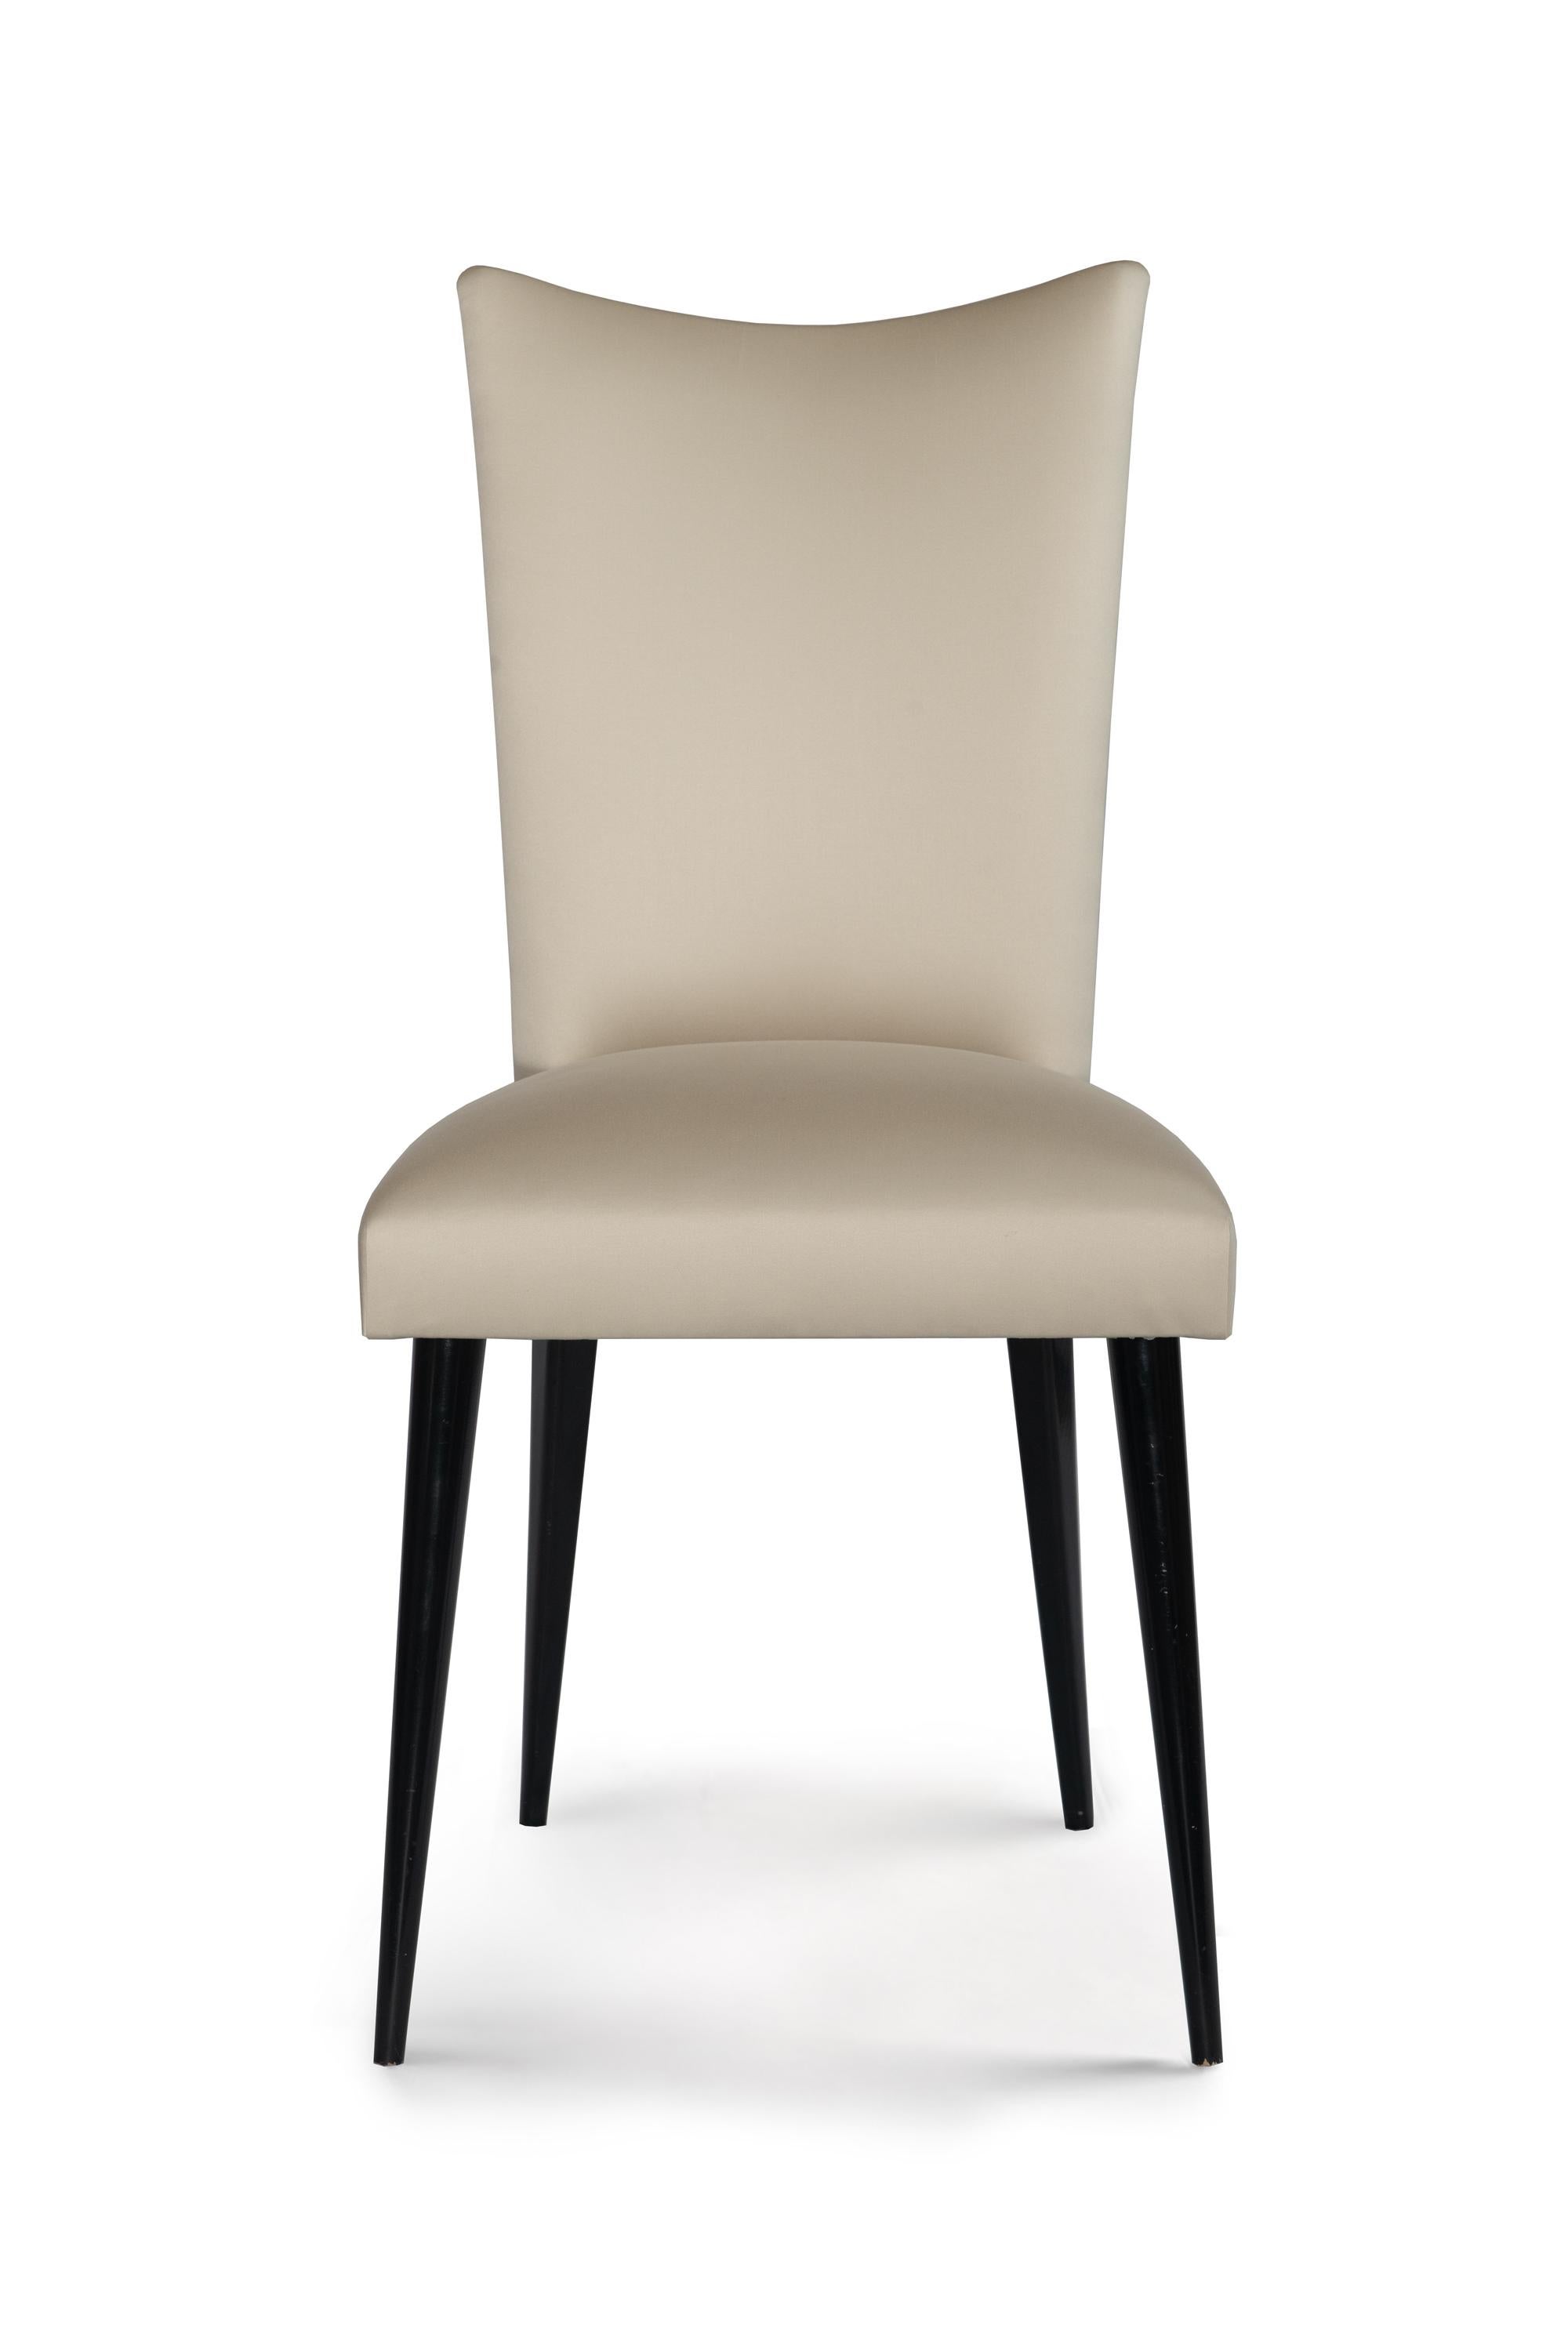 British Aiveen Daly Venetia Stiletto Chair  For Sale